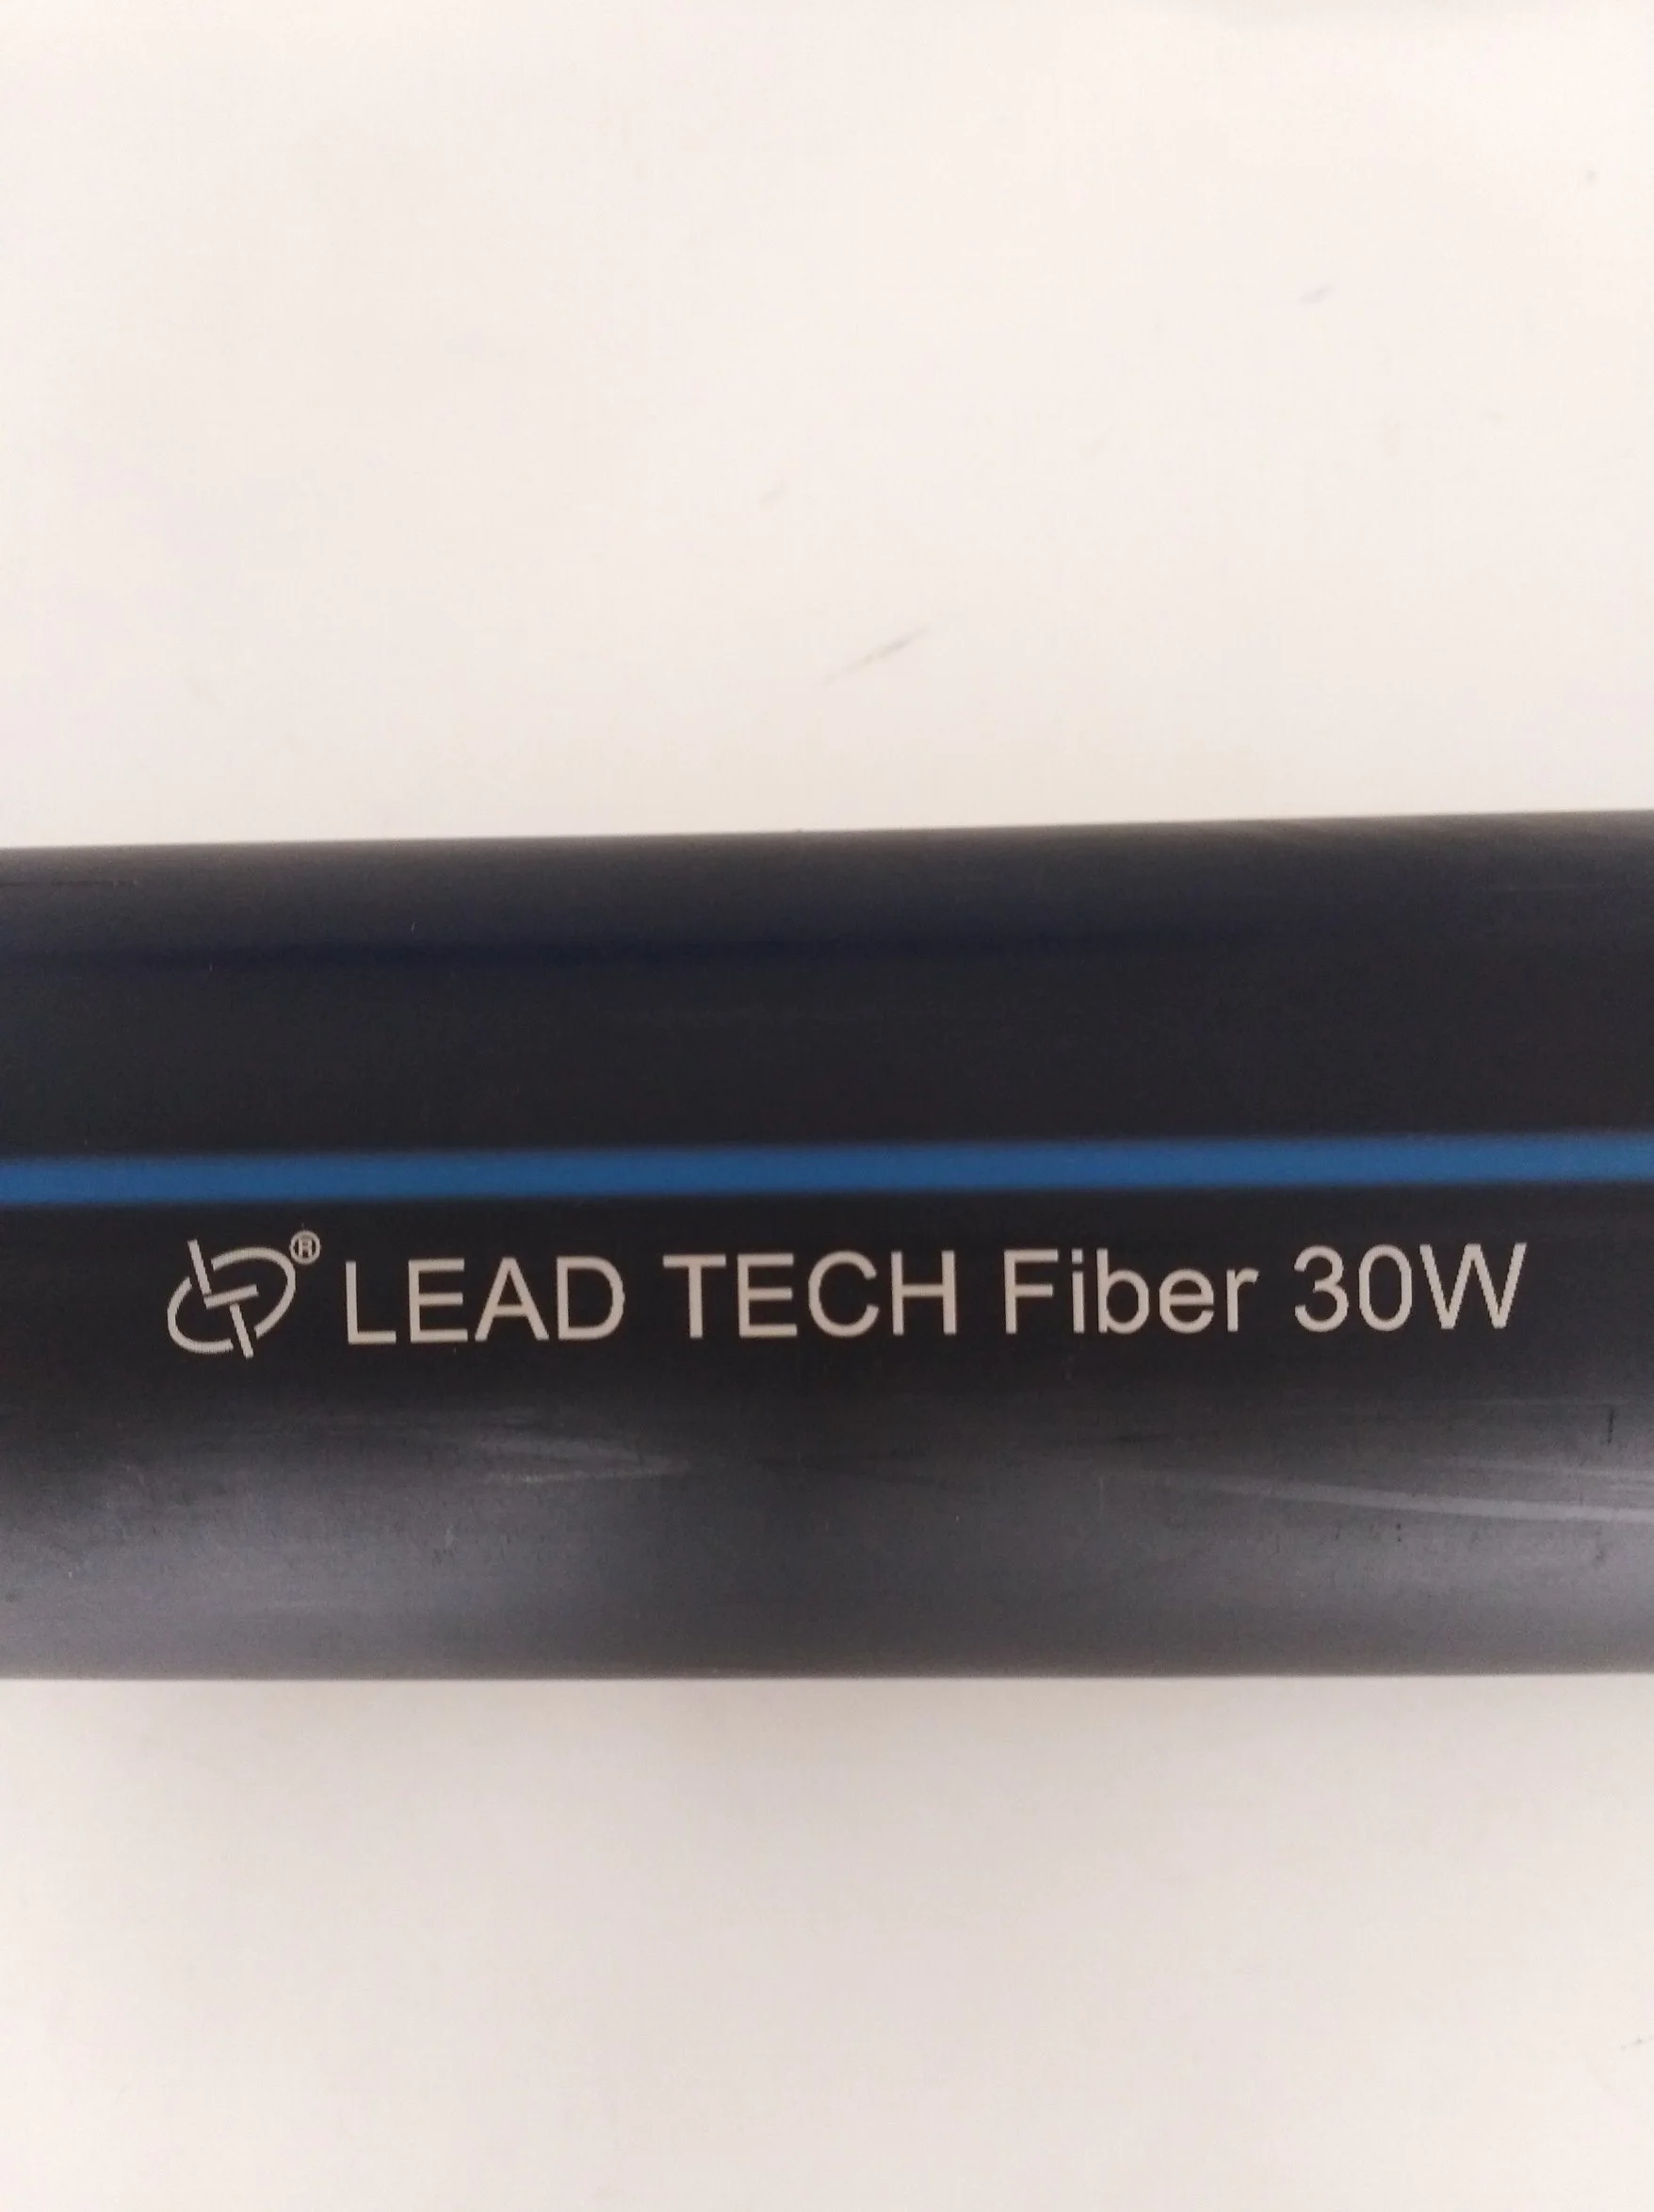 Lt8020f/Lt8030f/Lt8050f Fiber High Performance Can Food Laser Marking Printer